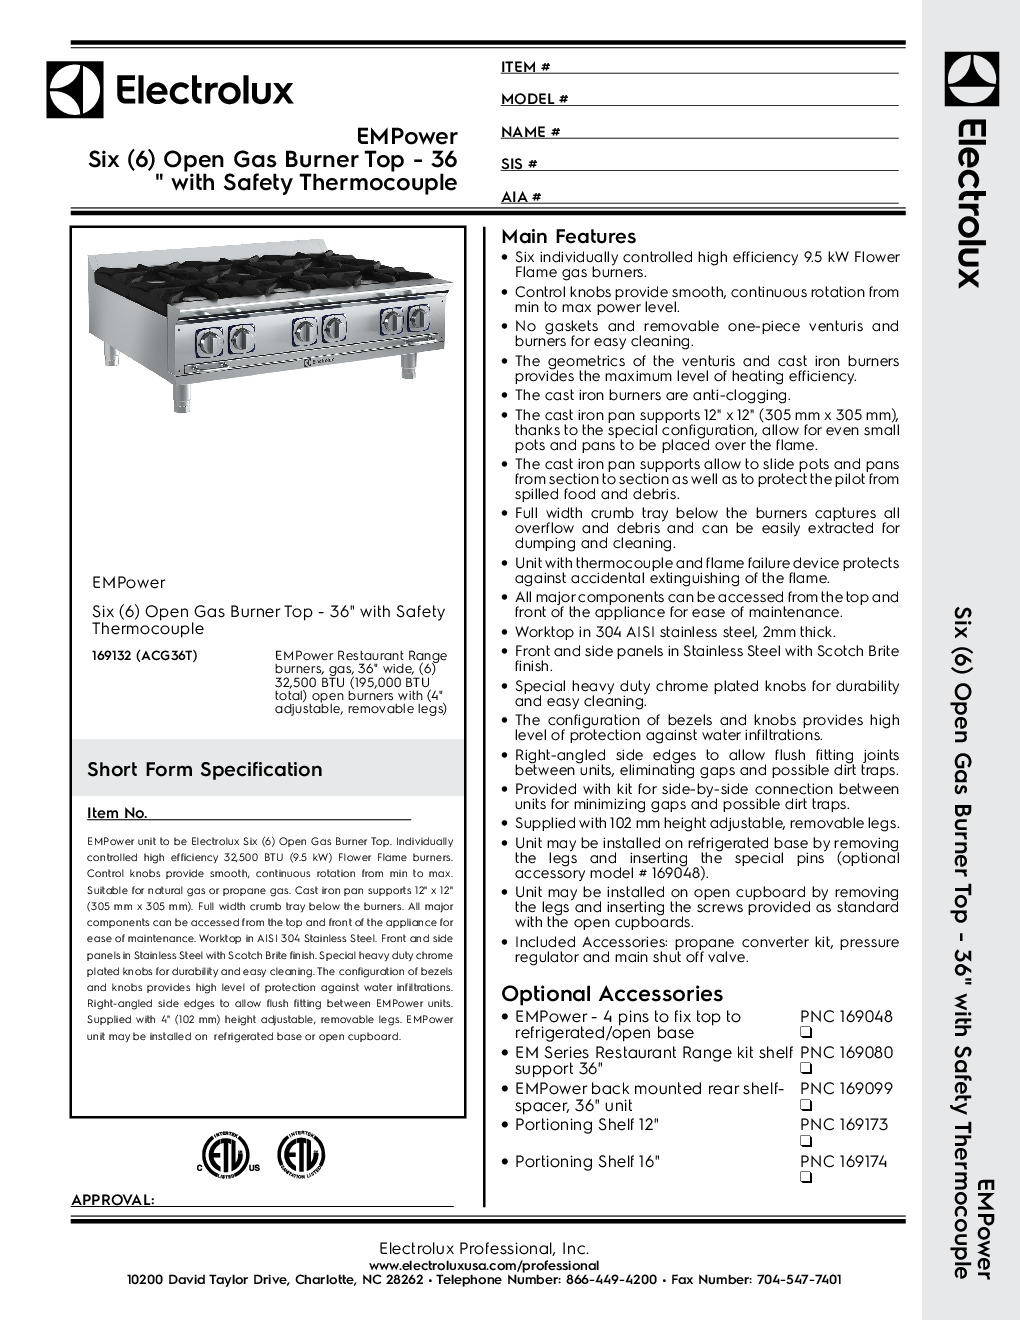 Electrolux 169132 Gas Countertop Hotplate